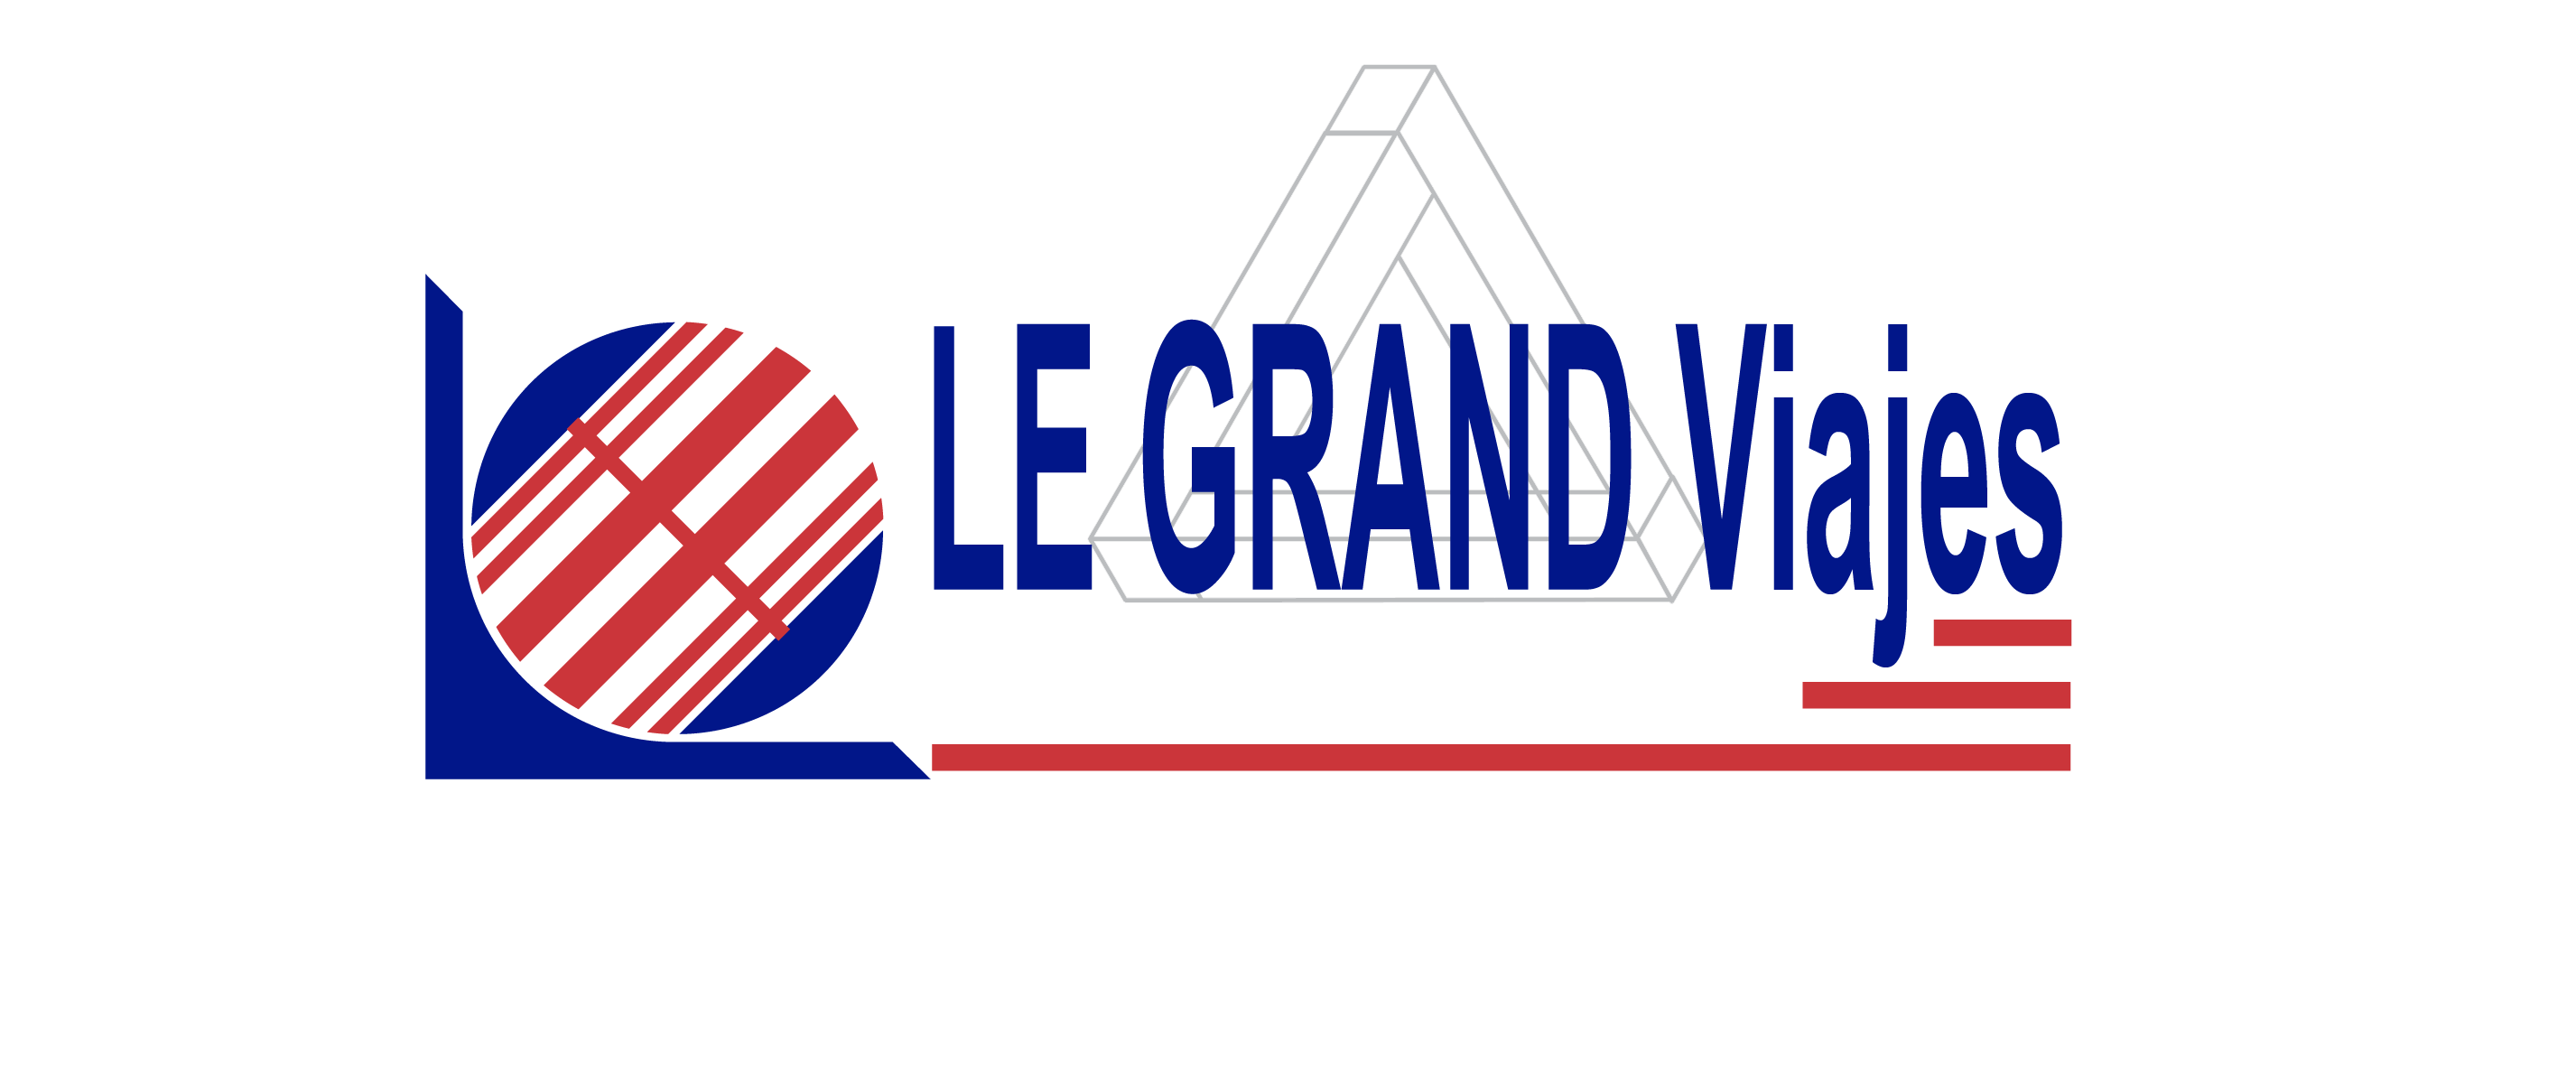 mayoreolegrand.com